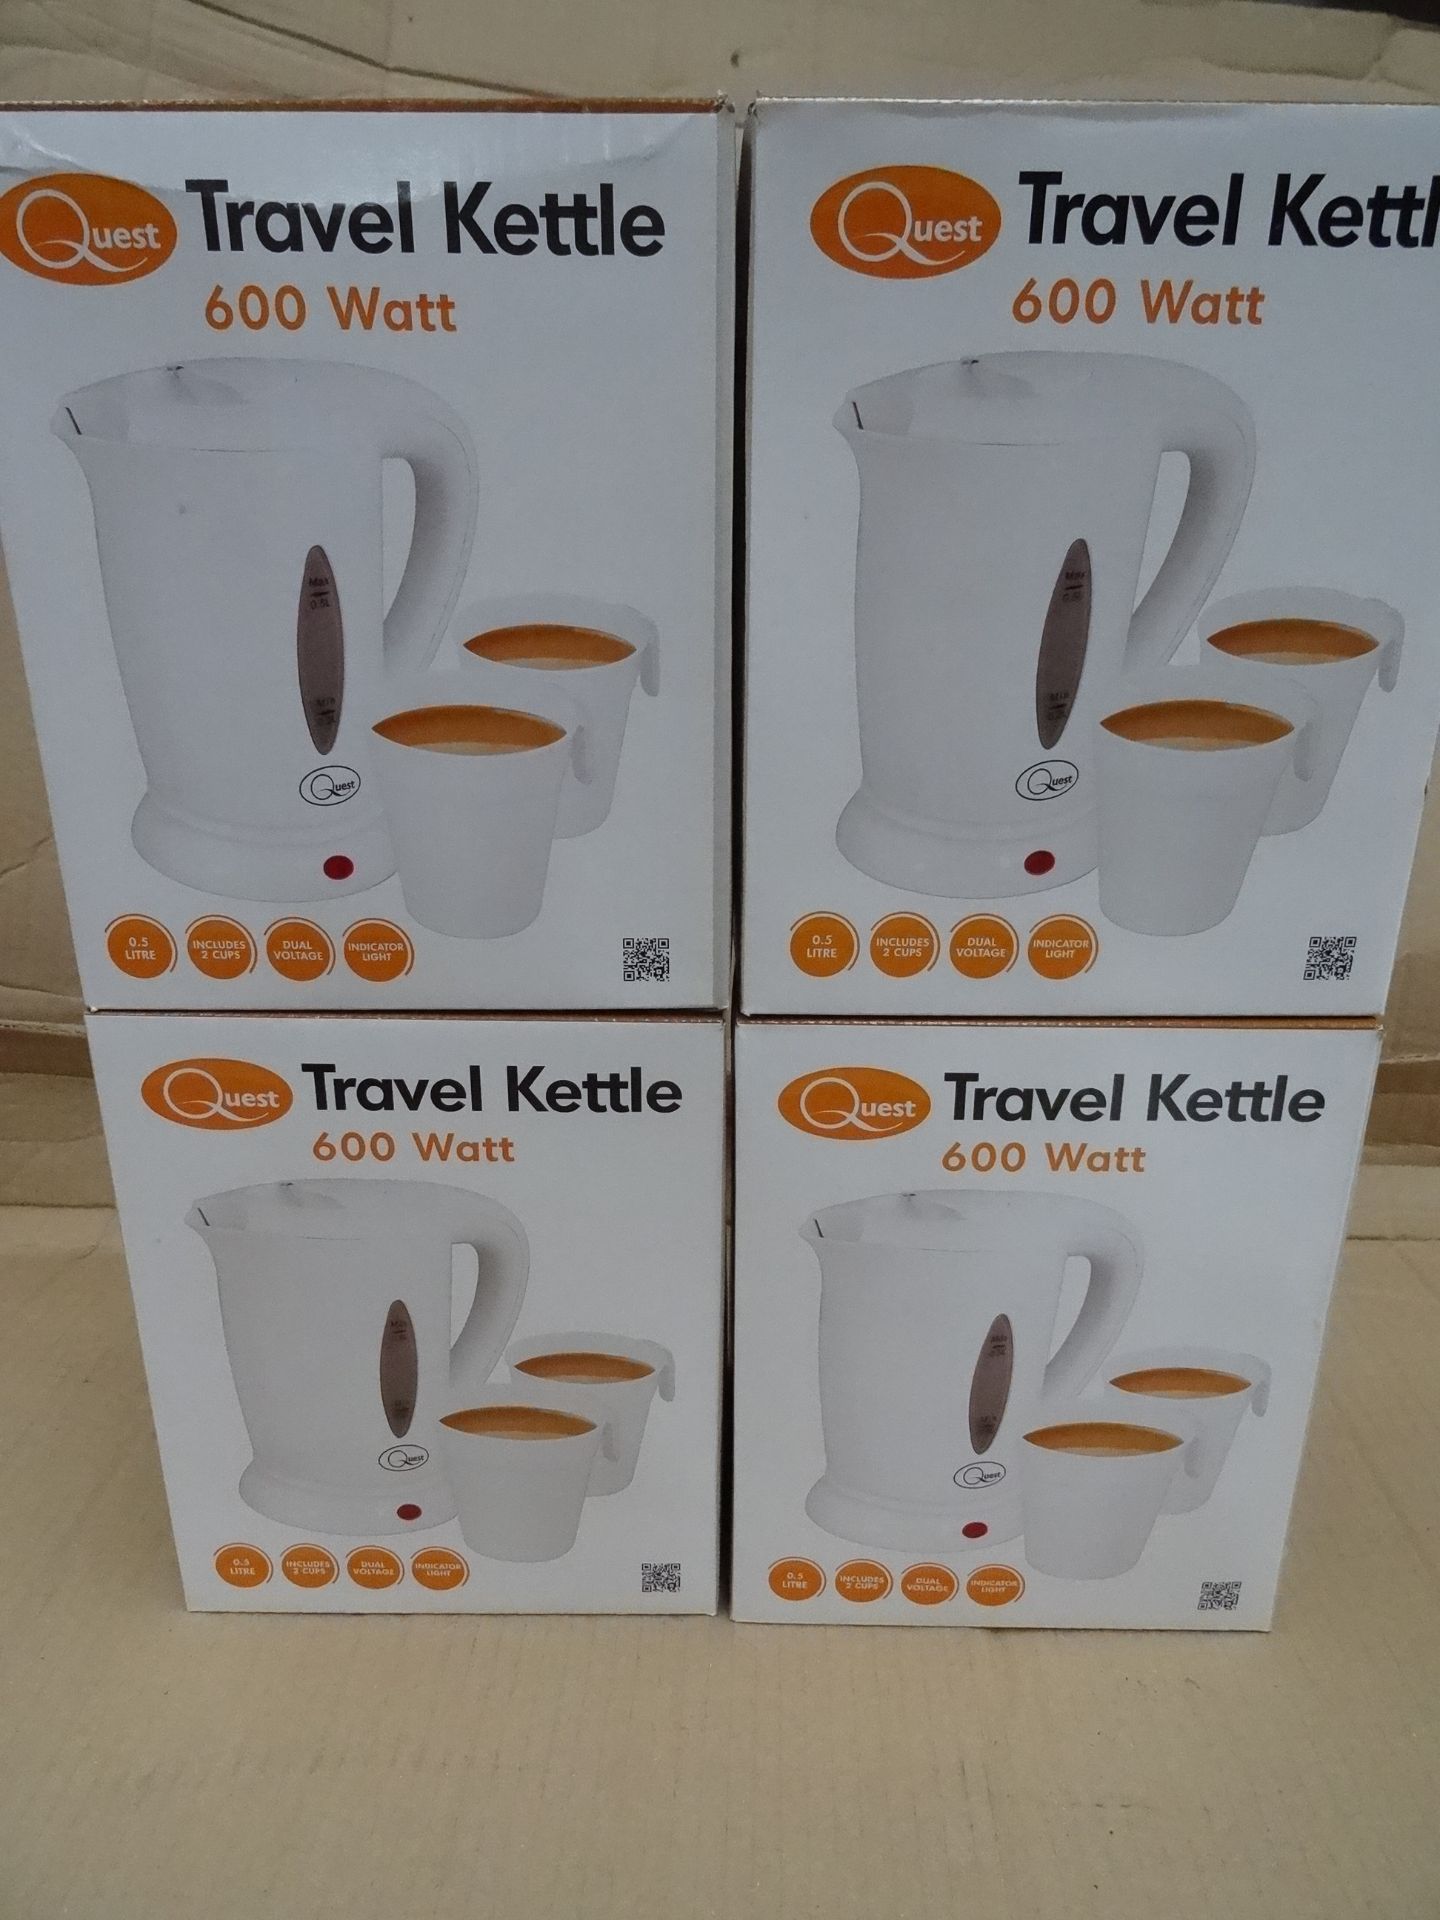 4 x Quest Travel Kettles. 600 Watt. 0.5 Litre. Includes 2 cups, dual voltage, indicator light. Brand